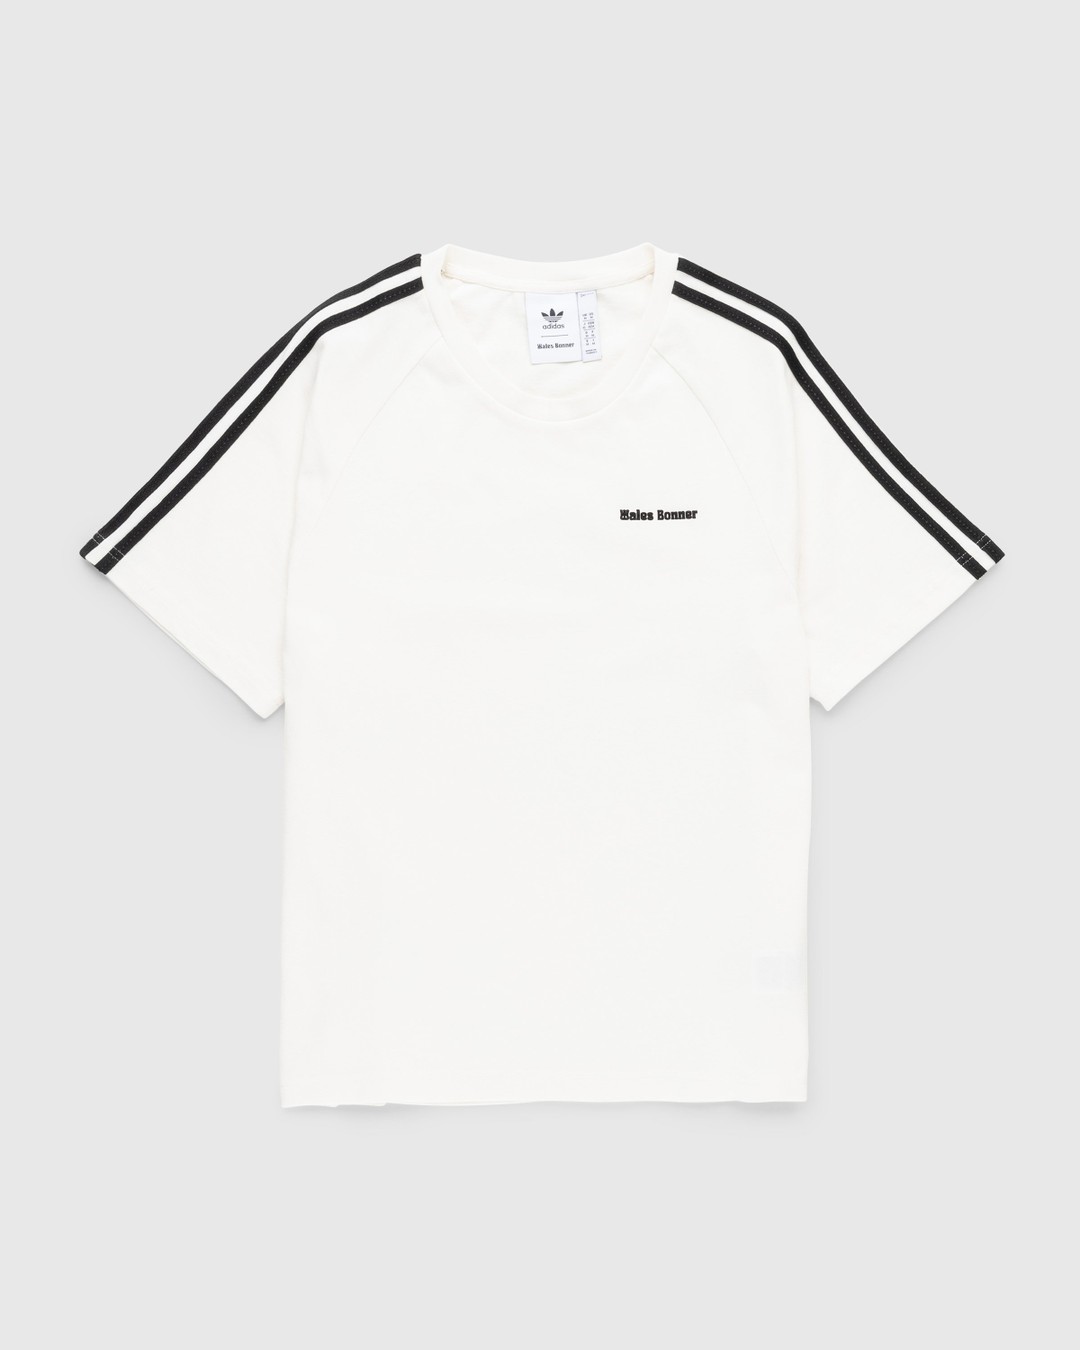 Adidas x Wales Bonner – Organic Cotton Tee Chalk White - T-shirts - White - Image 1